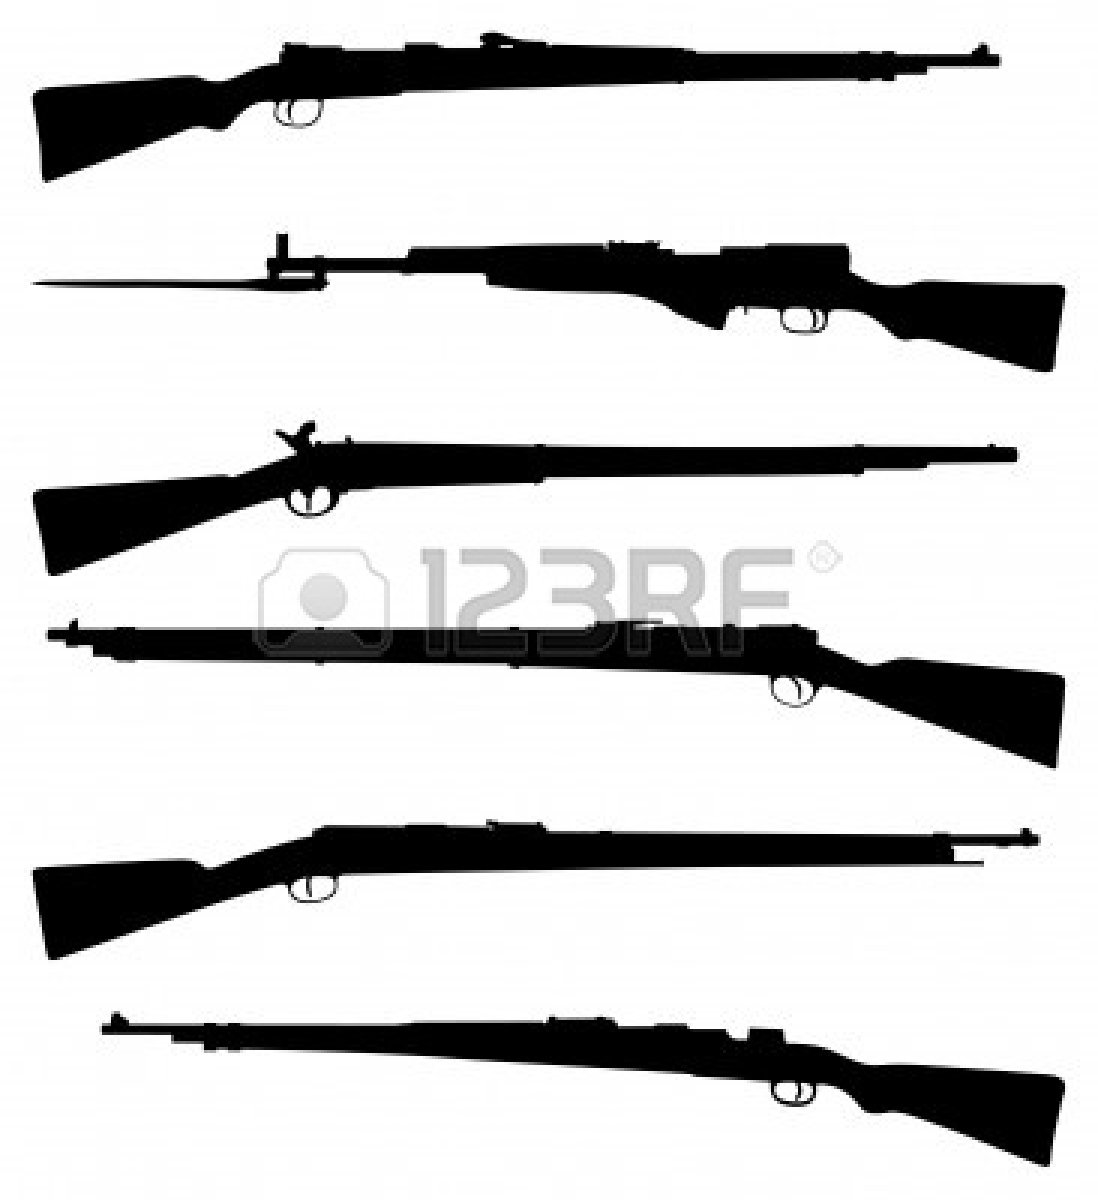  Clipart Black And White 7163876 Six Old Shotguns Black On White    